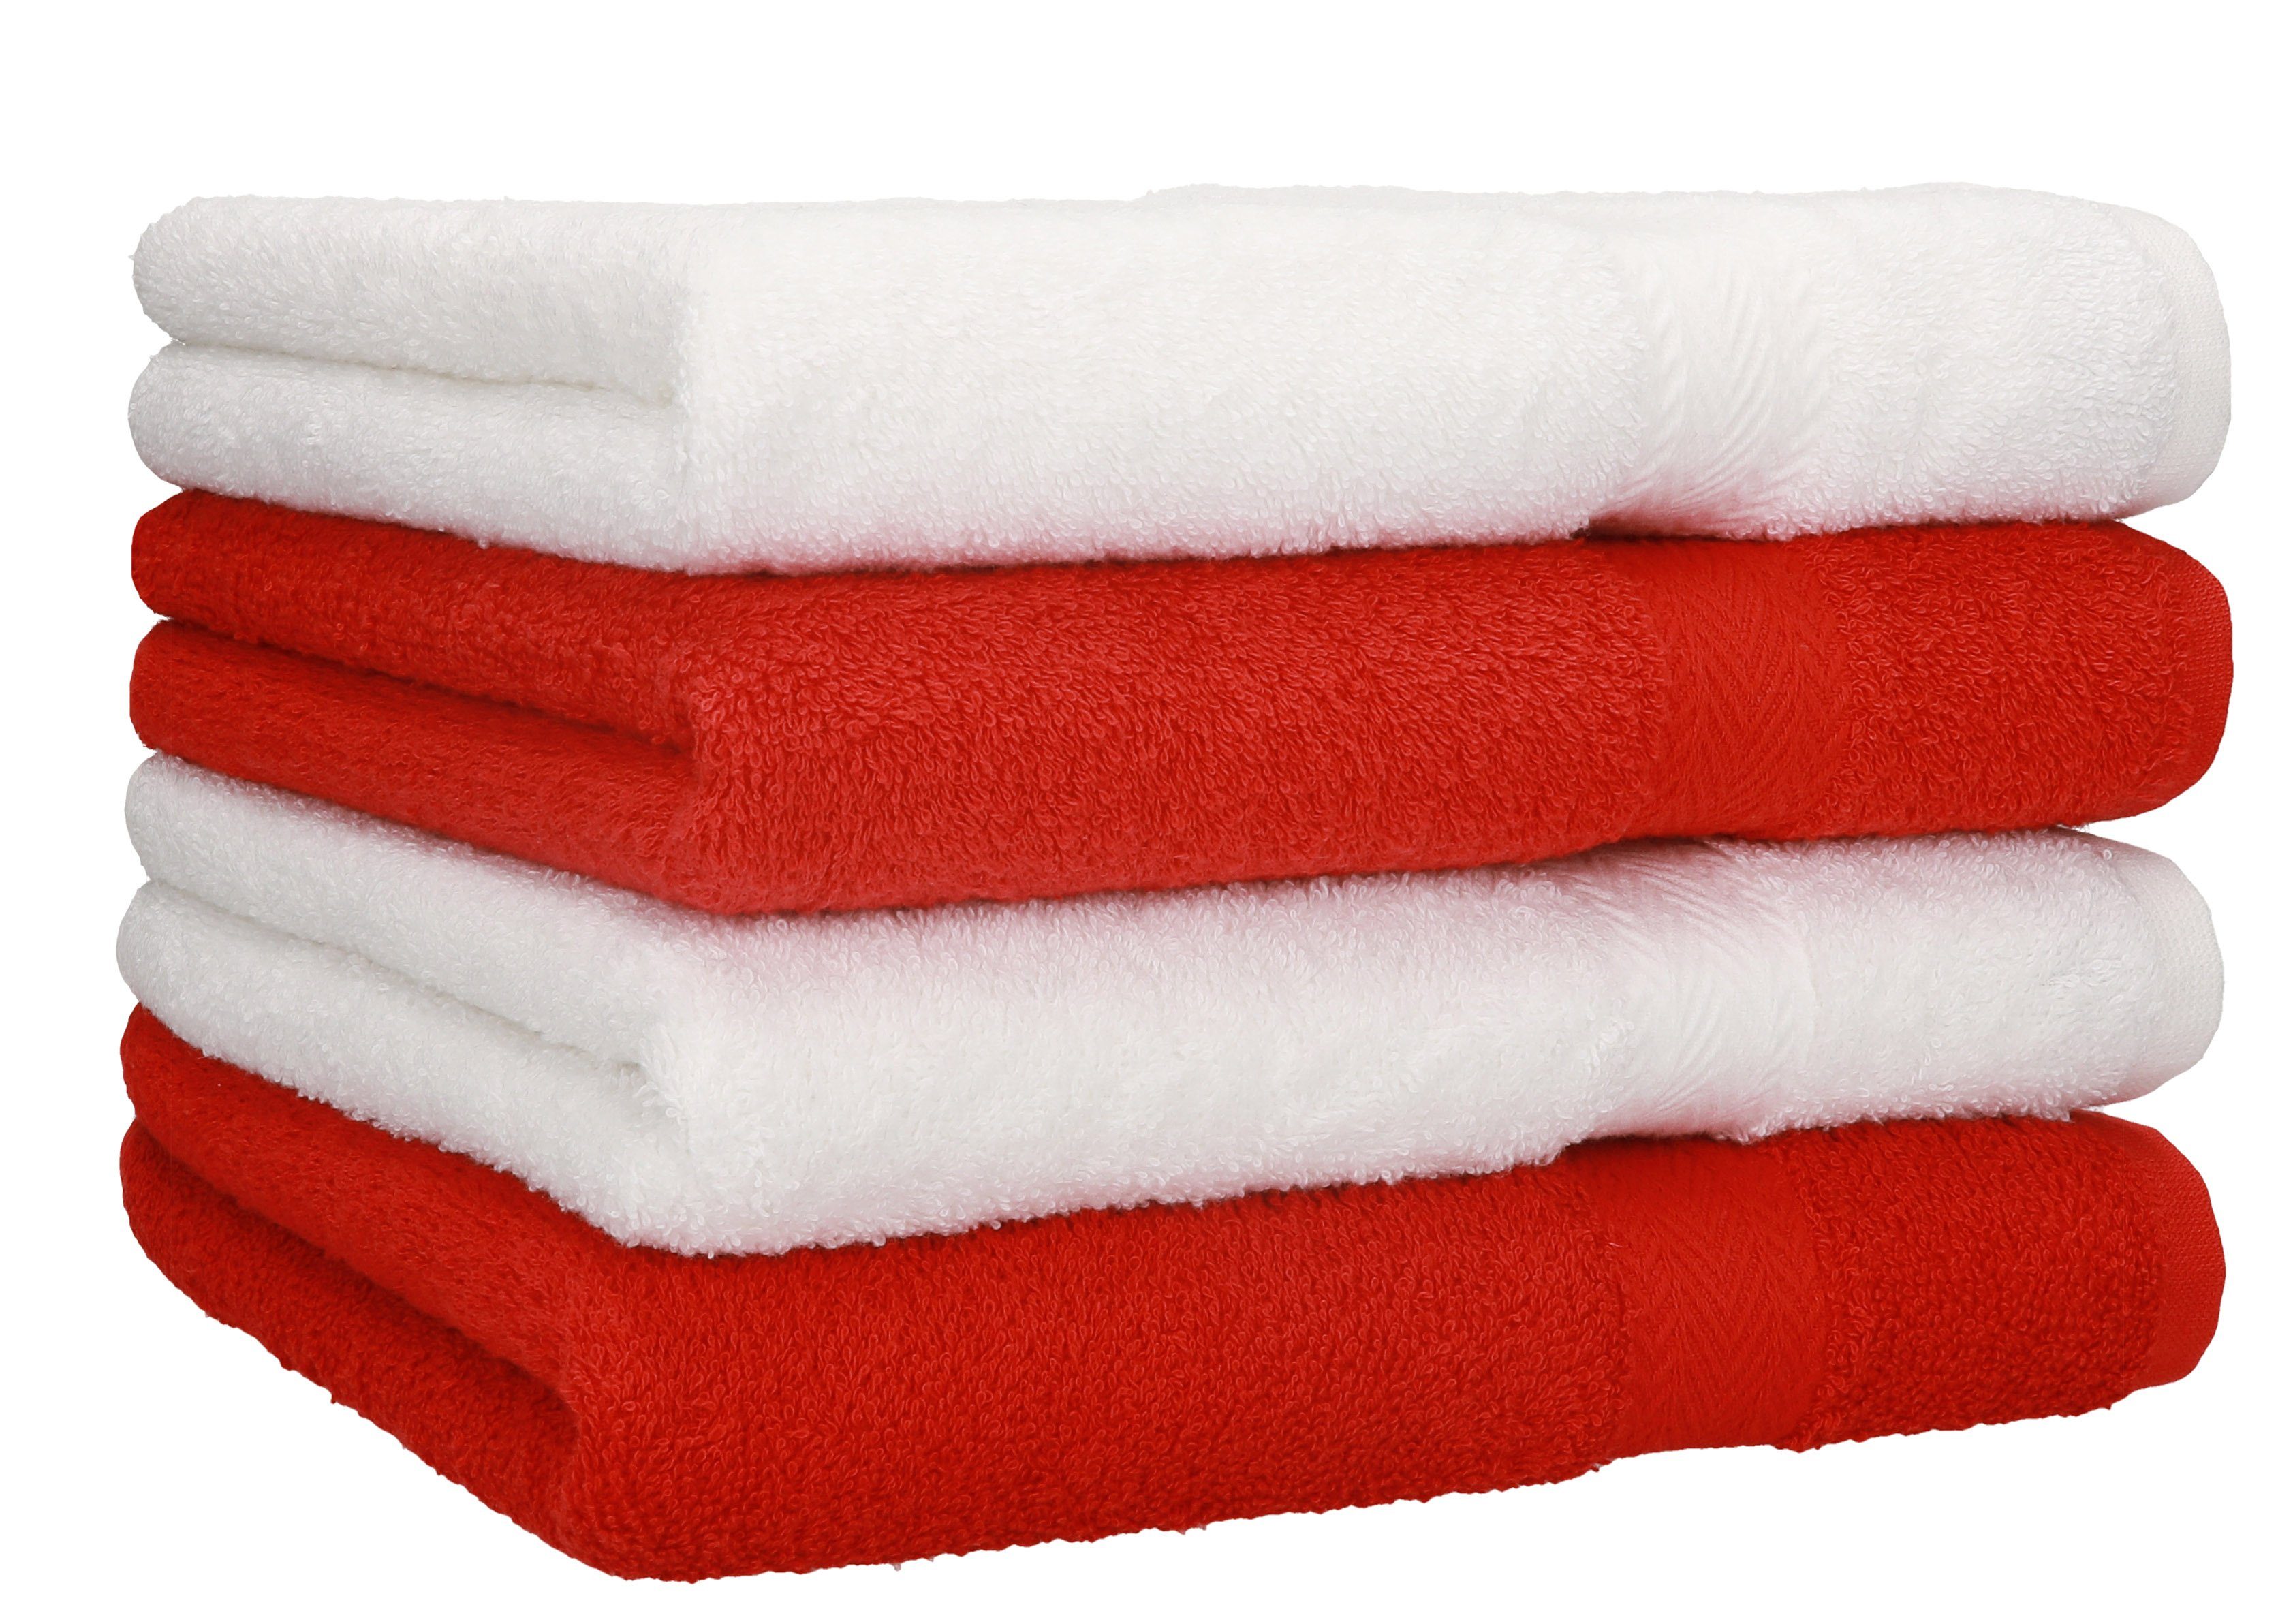 Betz Handtücher 4 Stück Handtücher Premium 4 Handtücher Farbe weiß und rot, 100% Baumwolle